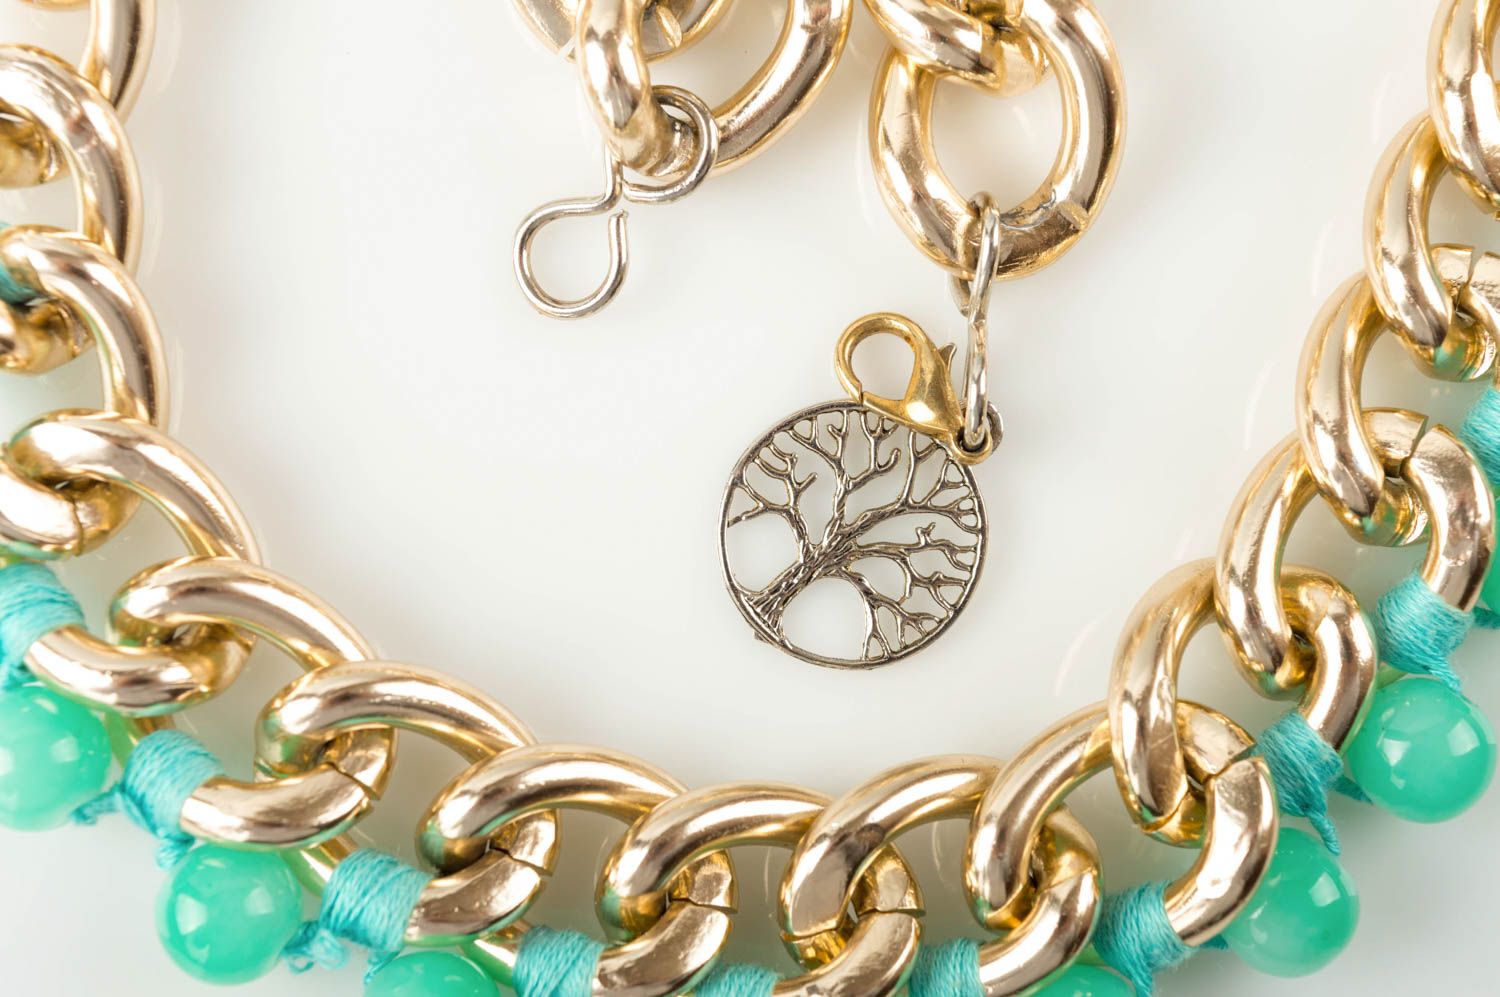 Handmade green necklace on chain stylish gold accessories beautiful jewelry photo 4